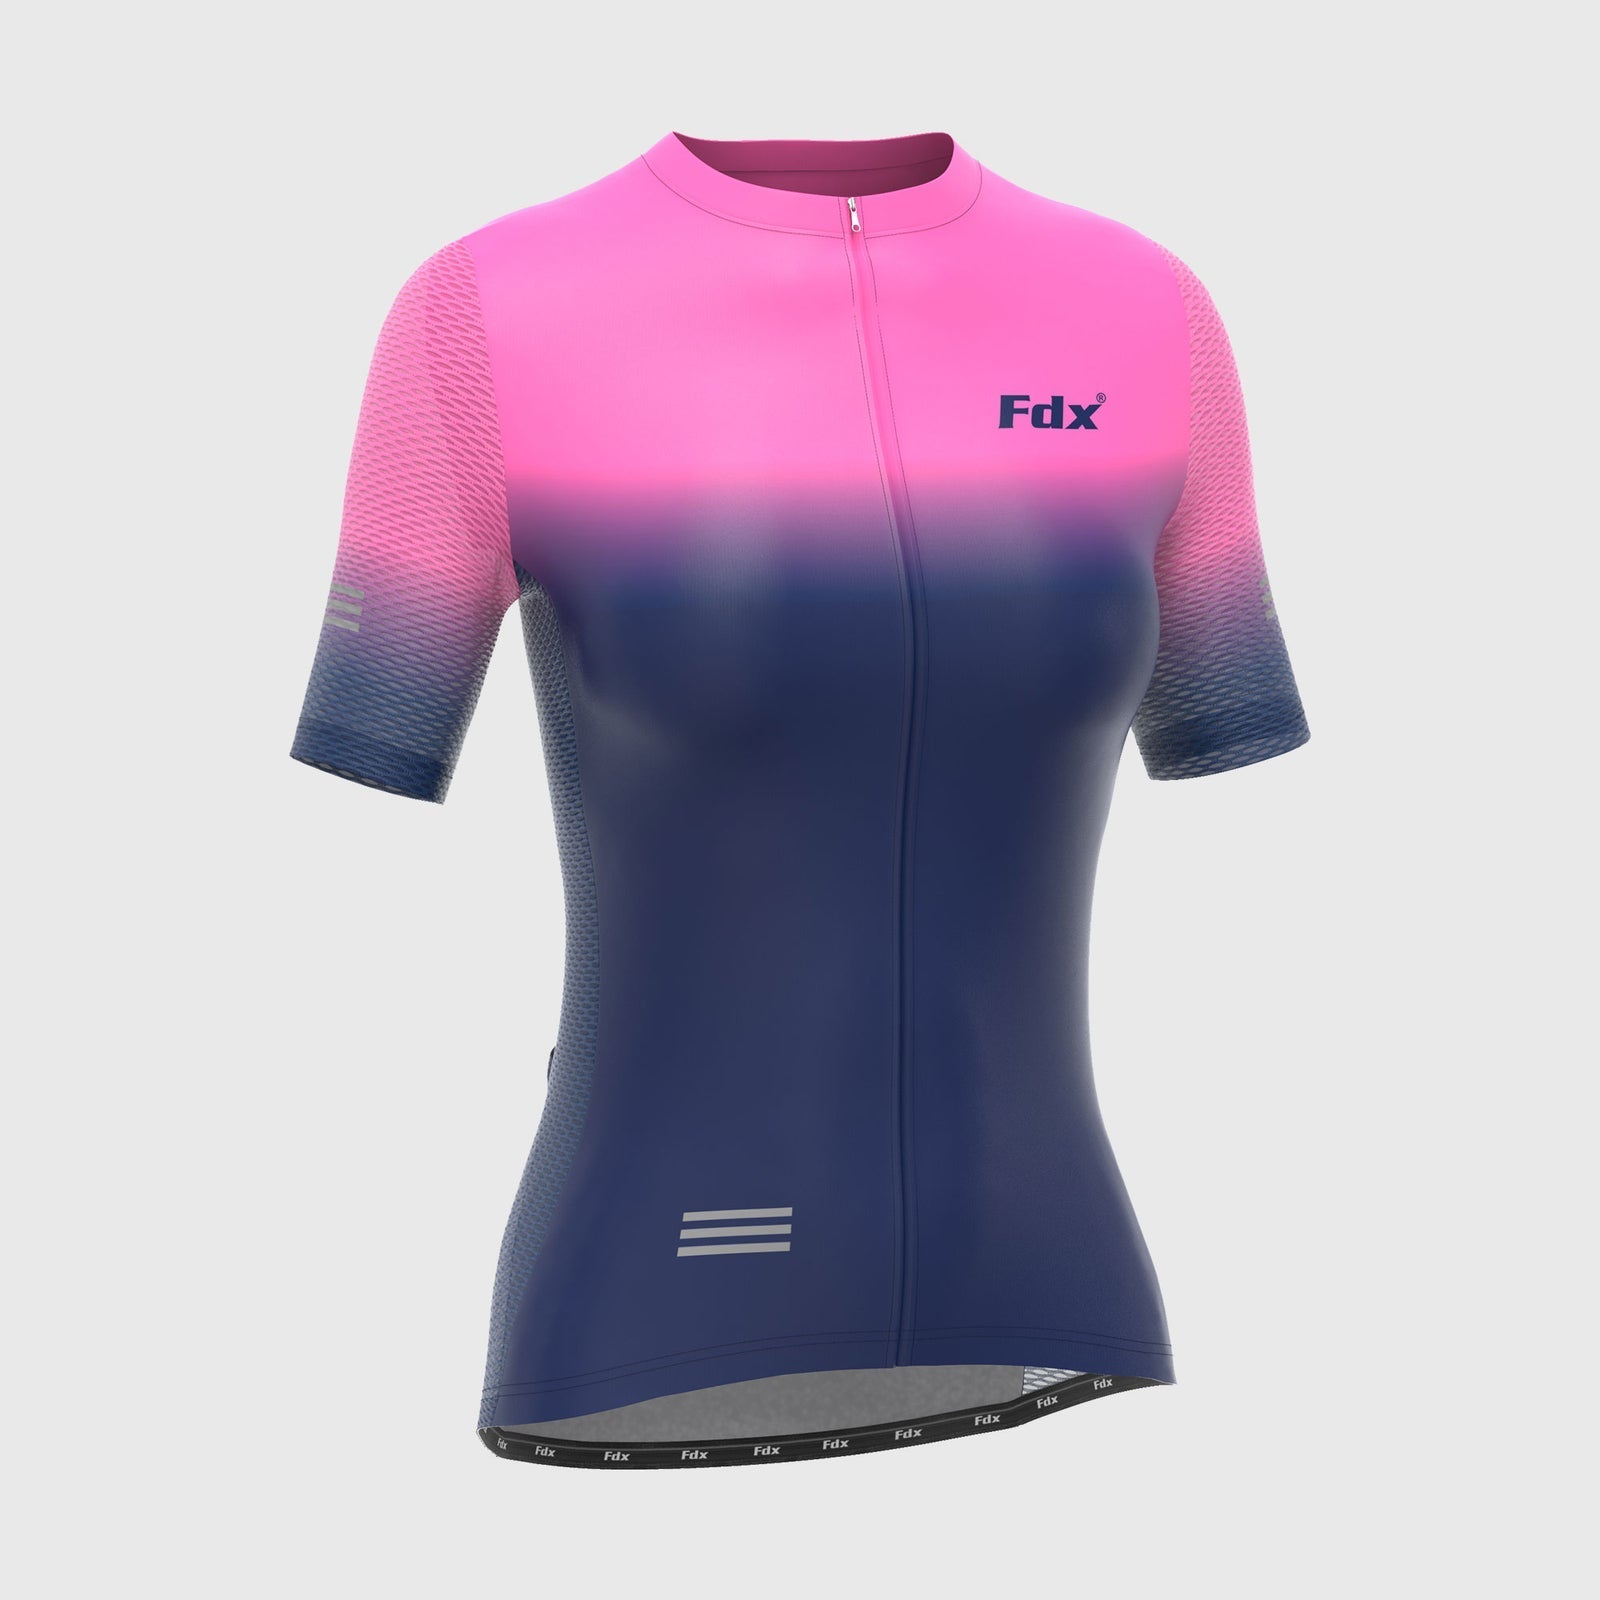 Fdx Duo Pink / Blue Women's Short Sleeve Summer Cycling Jersey